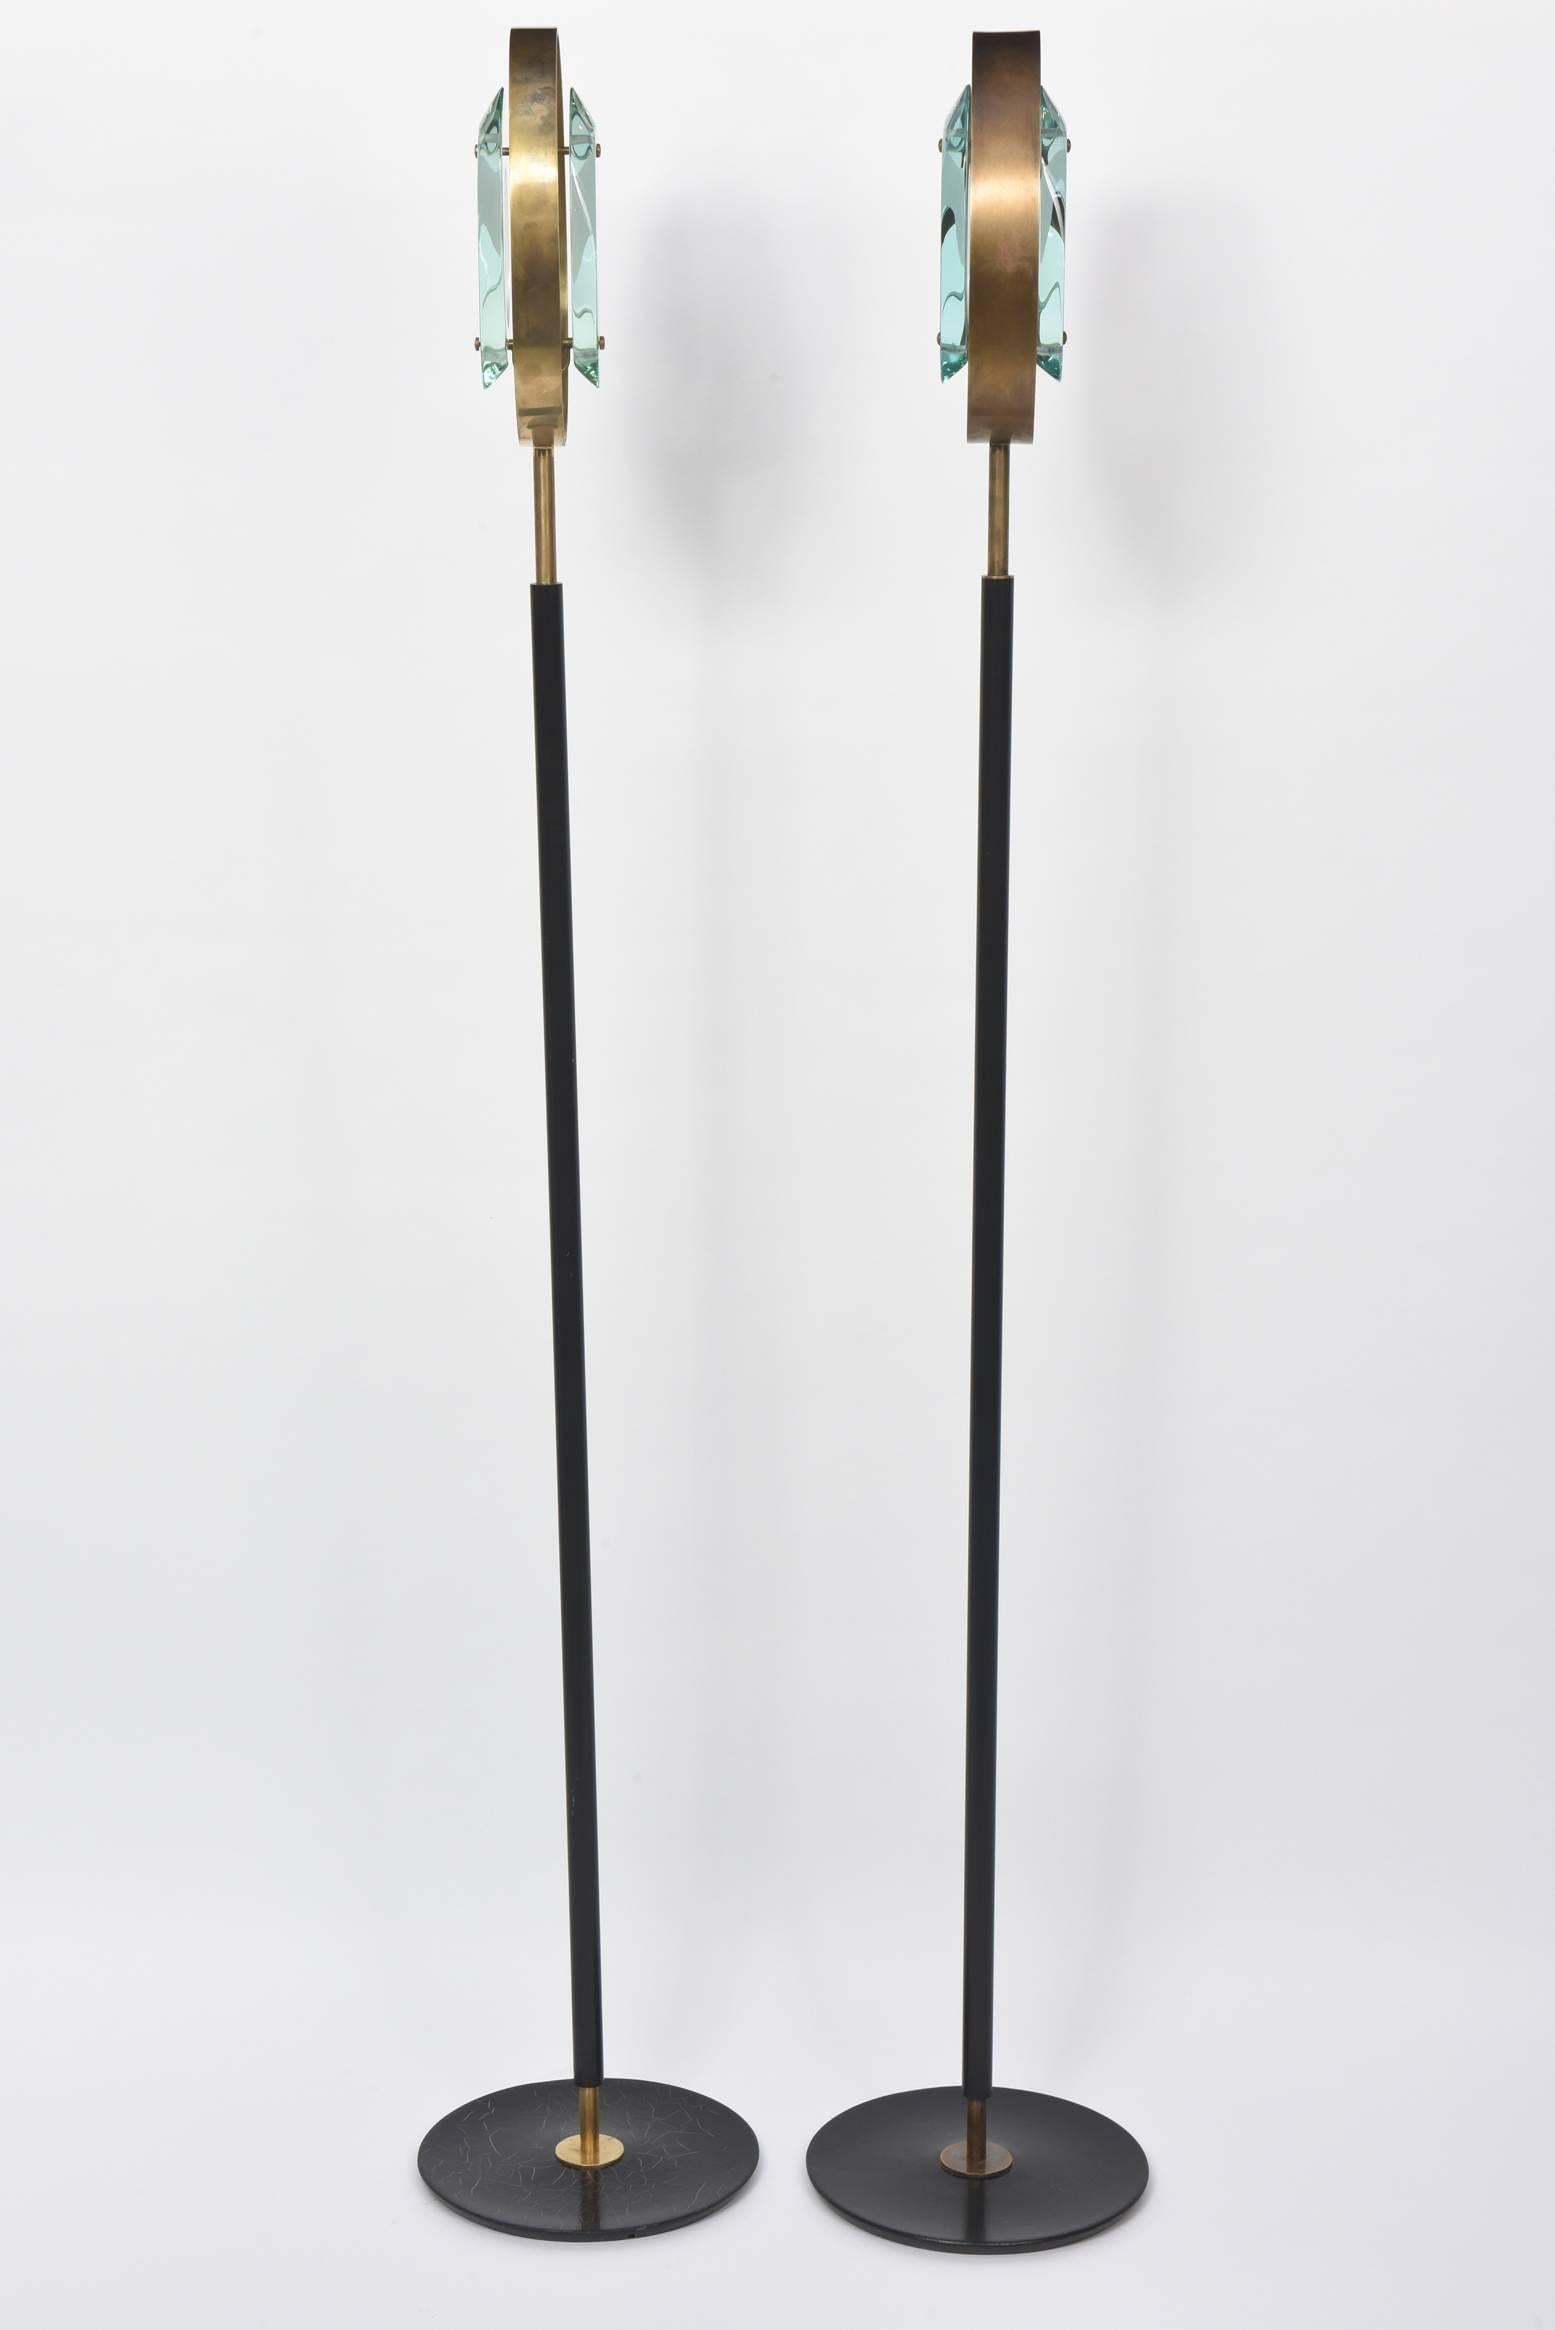 Rare Pair of Italian Modern Standing Lamps, Fontana Arte, Max Ingrand 1